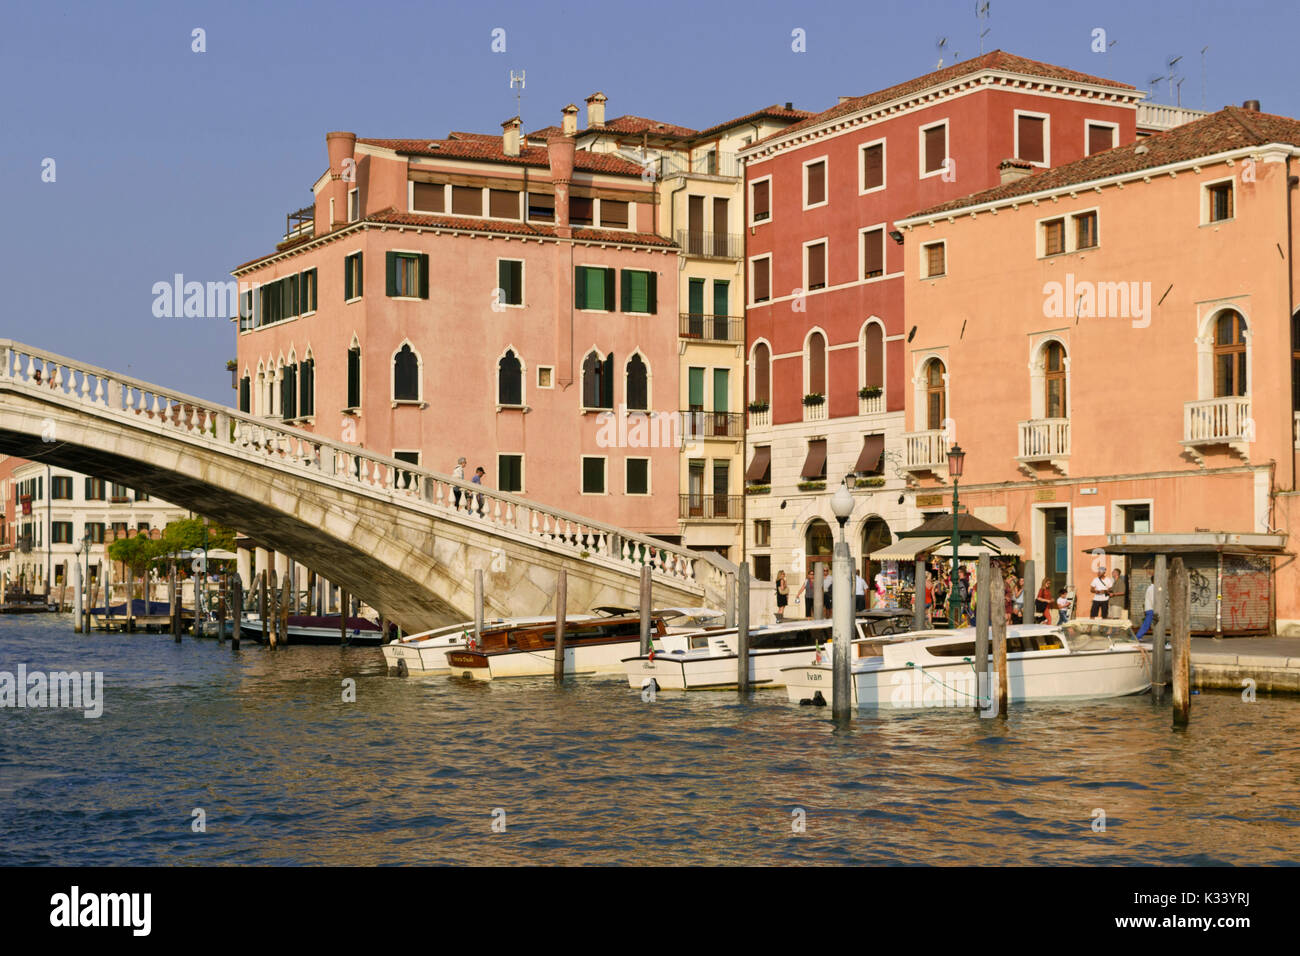 Ponte degli Scalzi and Palazzo Foscari Contarini, Venice, Italy Stock Photo